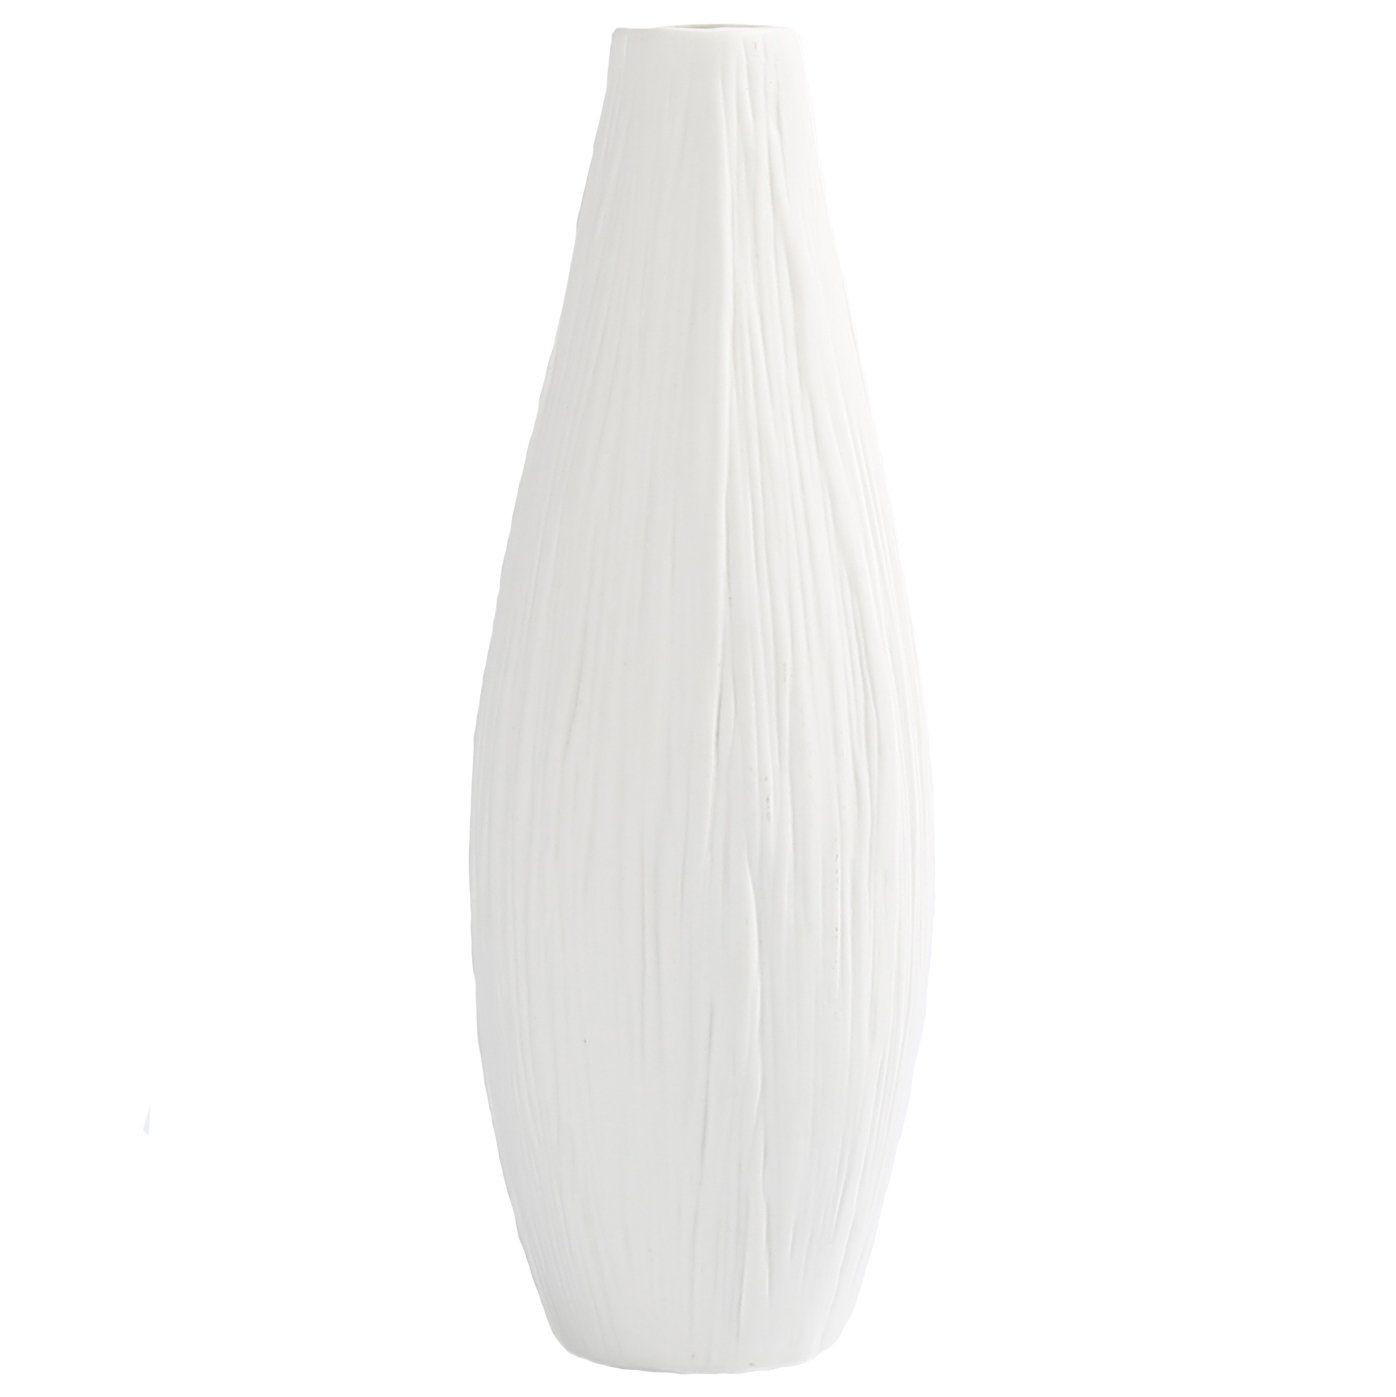 25 Elegant Oval Flower Vase 2024 free download oval flower vase of tall black vases collection d vine dev 10 pure white ceramic flower with regard to d vine dev 10 pure white ceramic flower vase tall oval